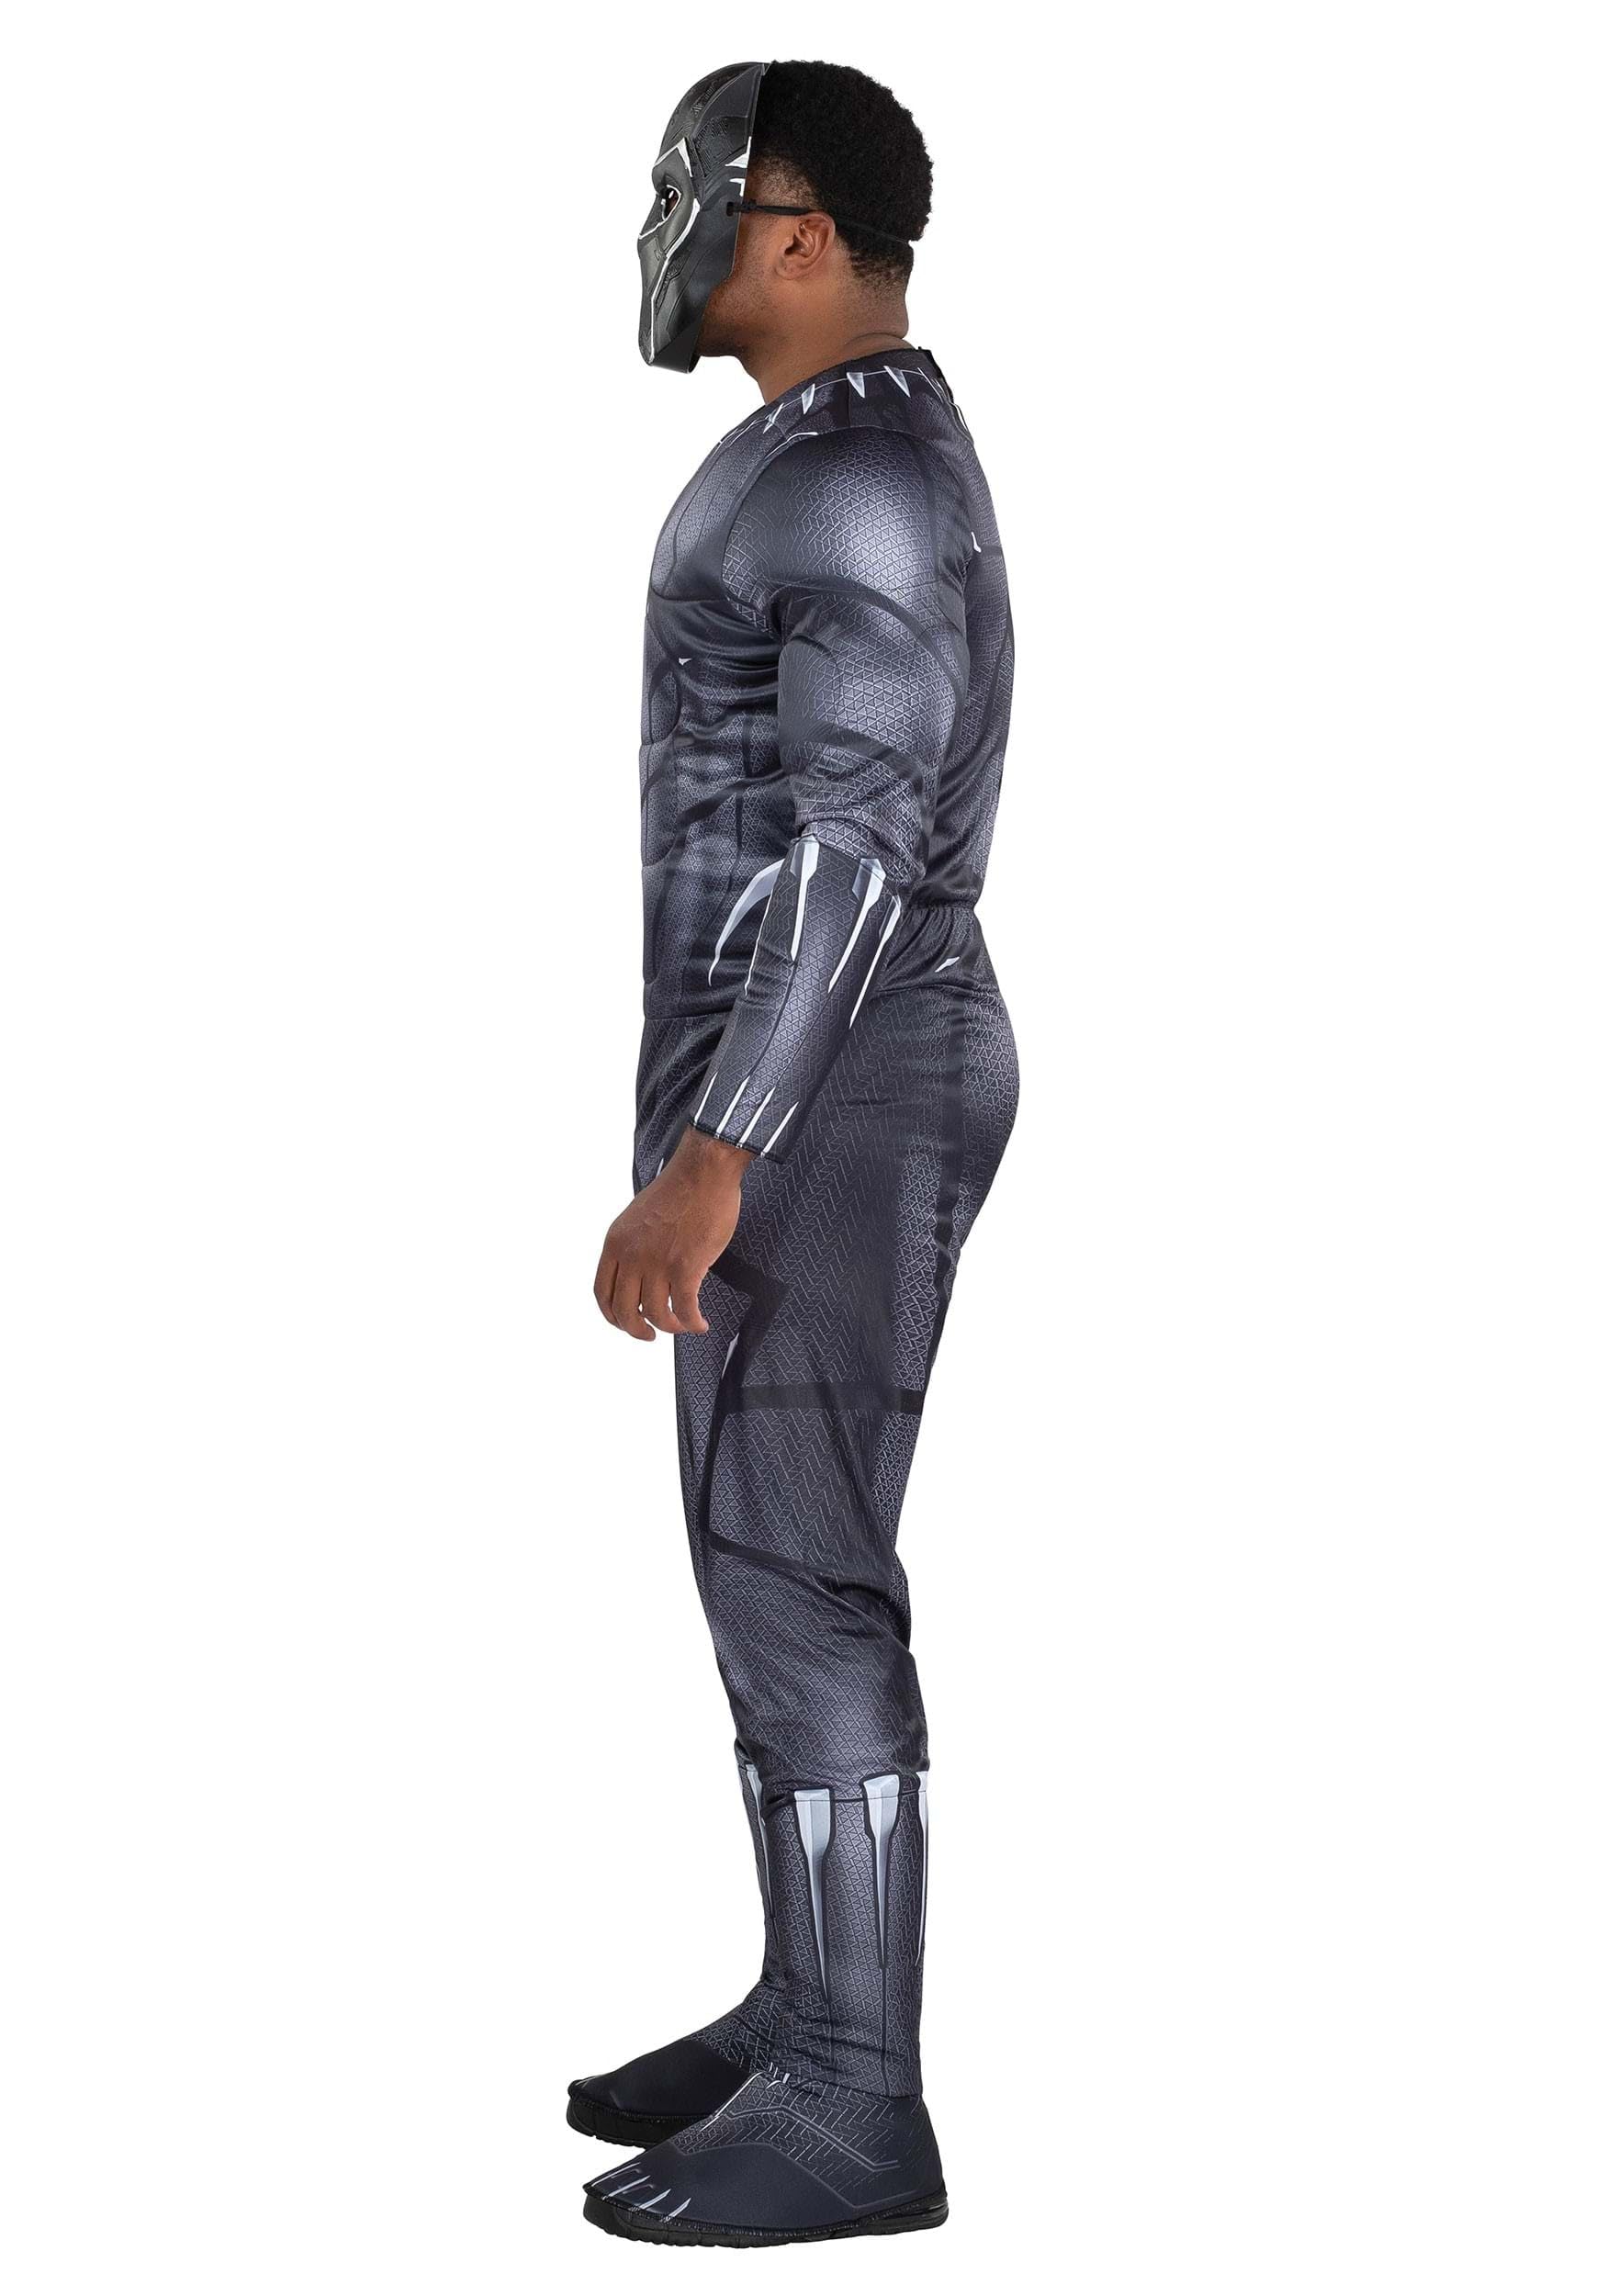 MARVEL Black Panther Adult Costume